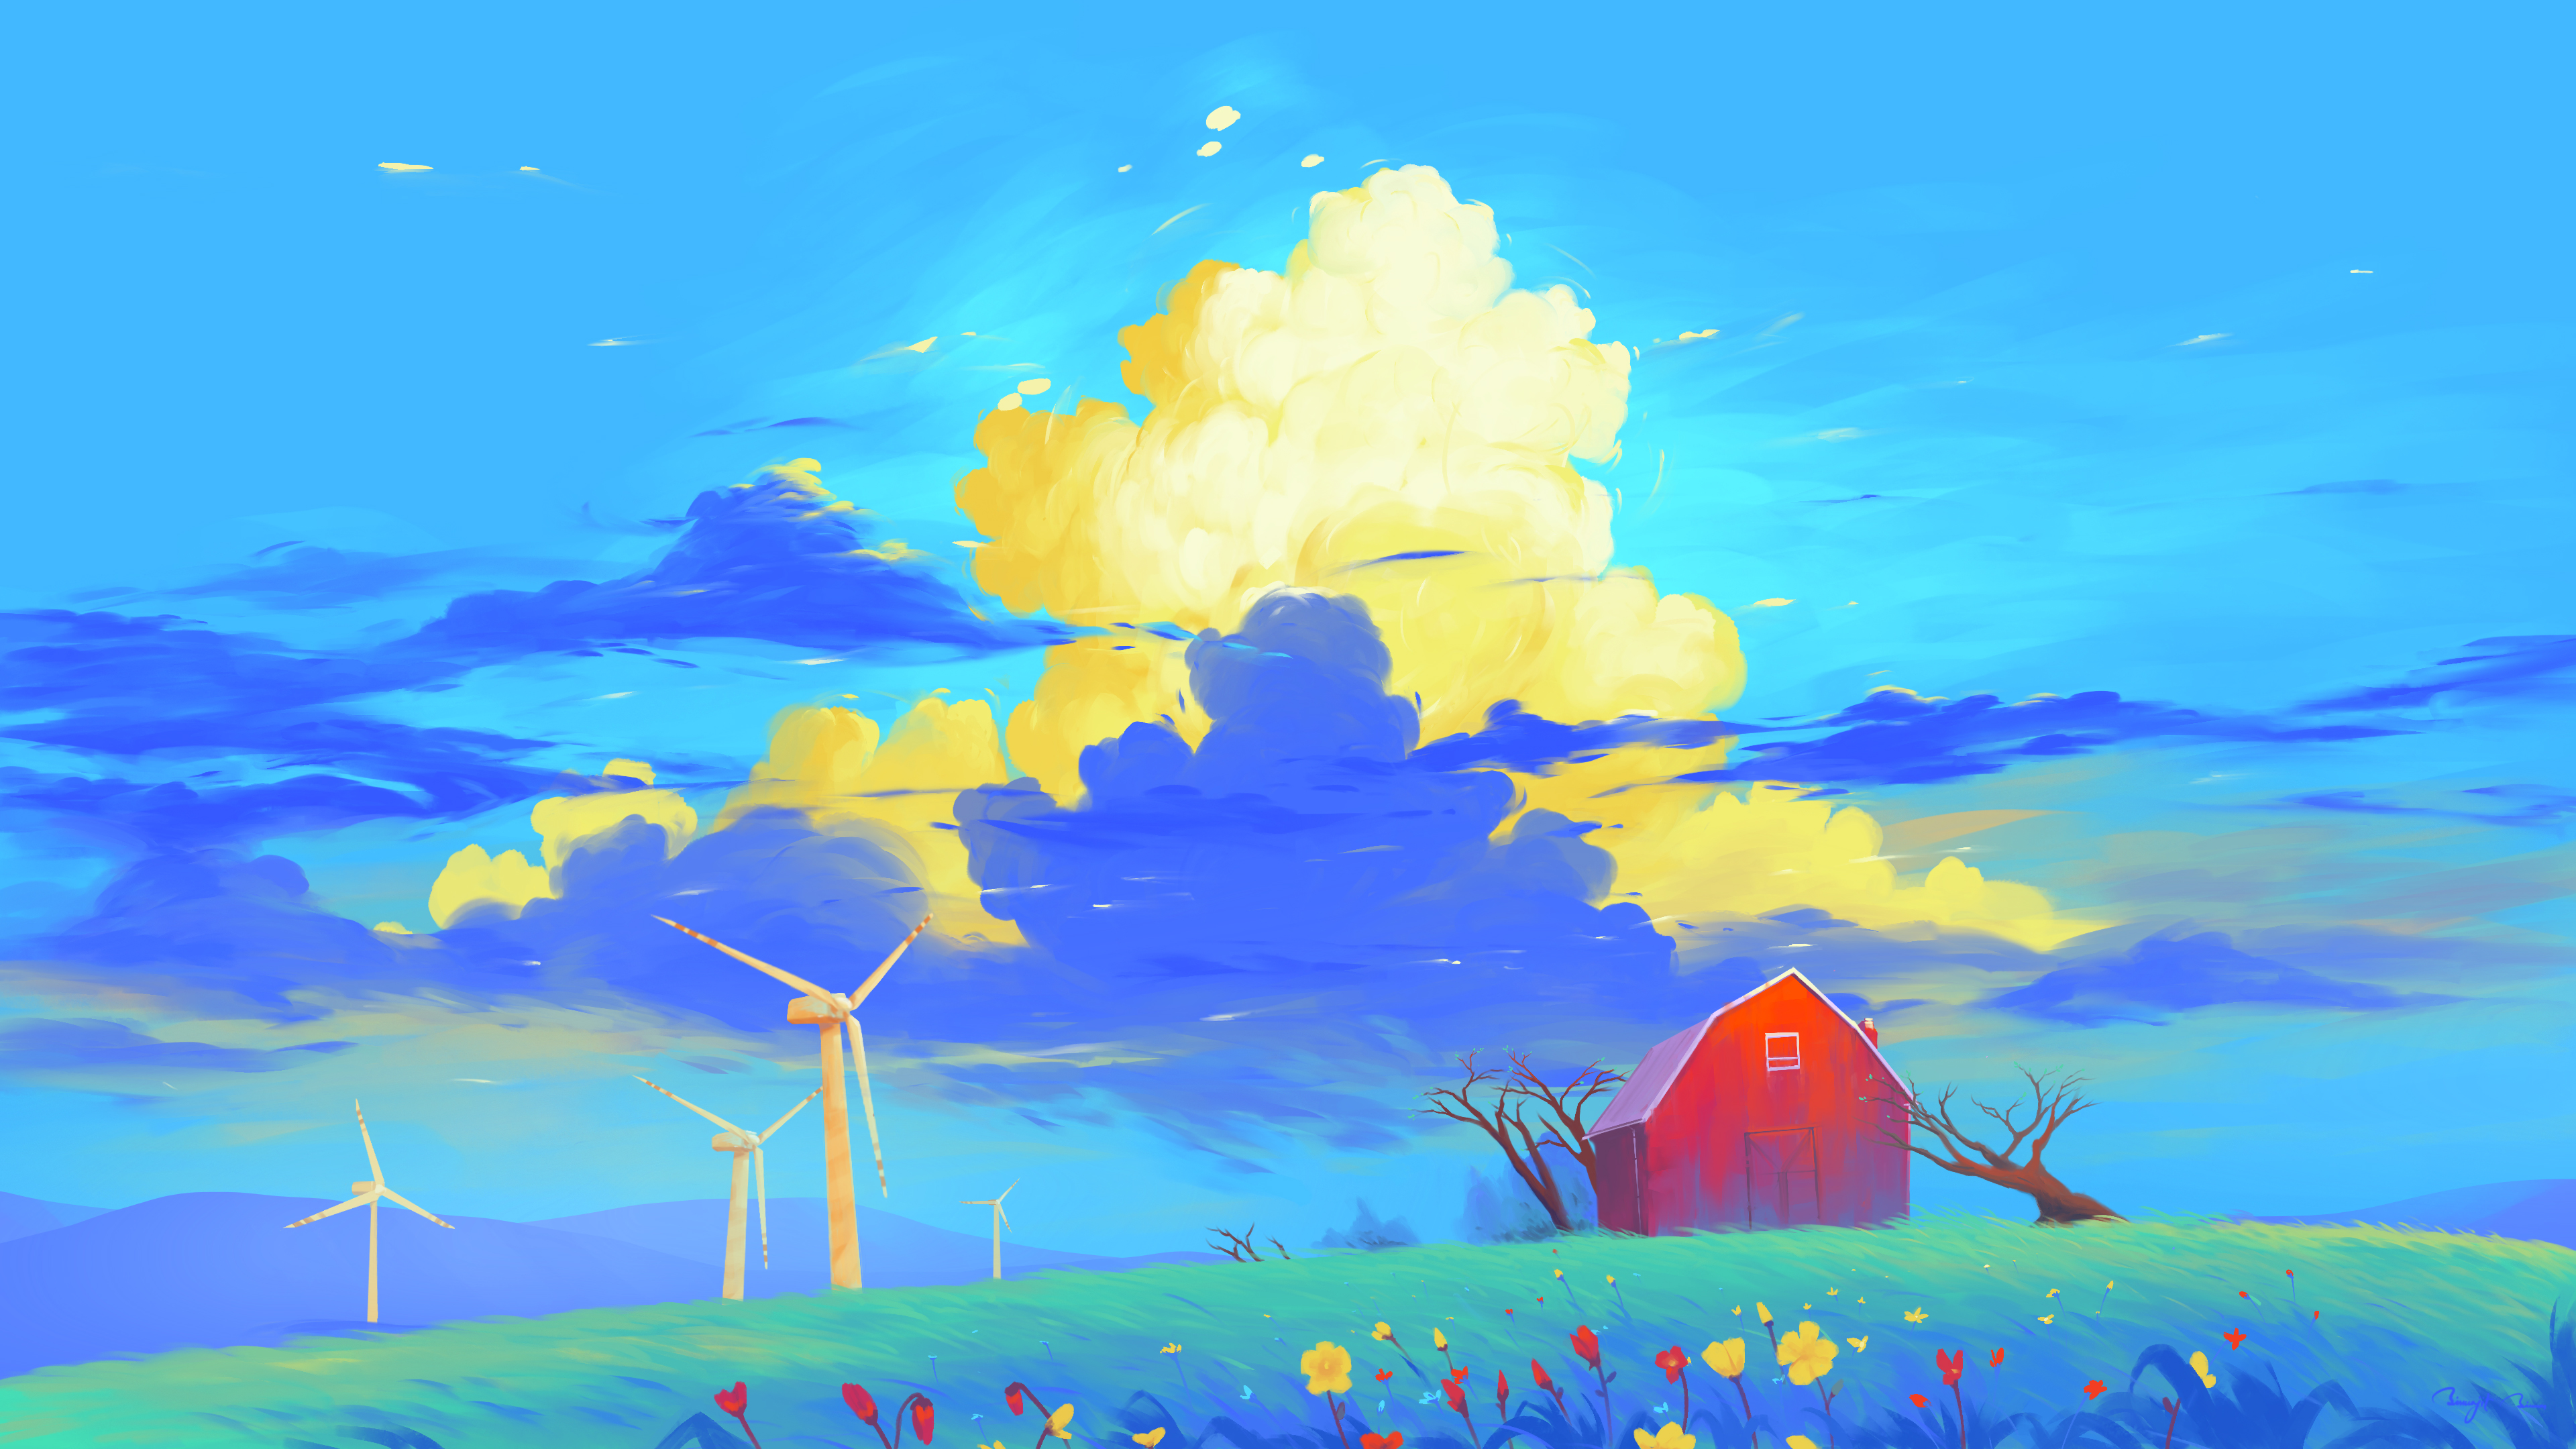 General 3840x2160 BisBiswas digital art artwork illustration landscape nature colorful clouds field trees flowers plants signature wind turbine sky 4K wind